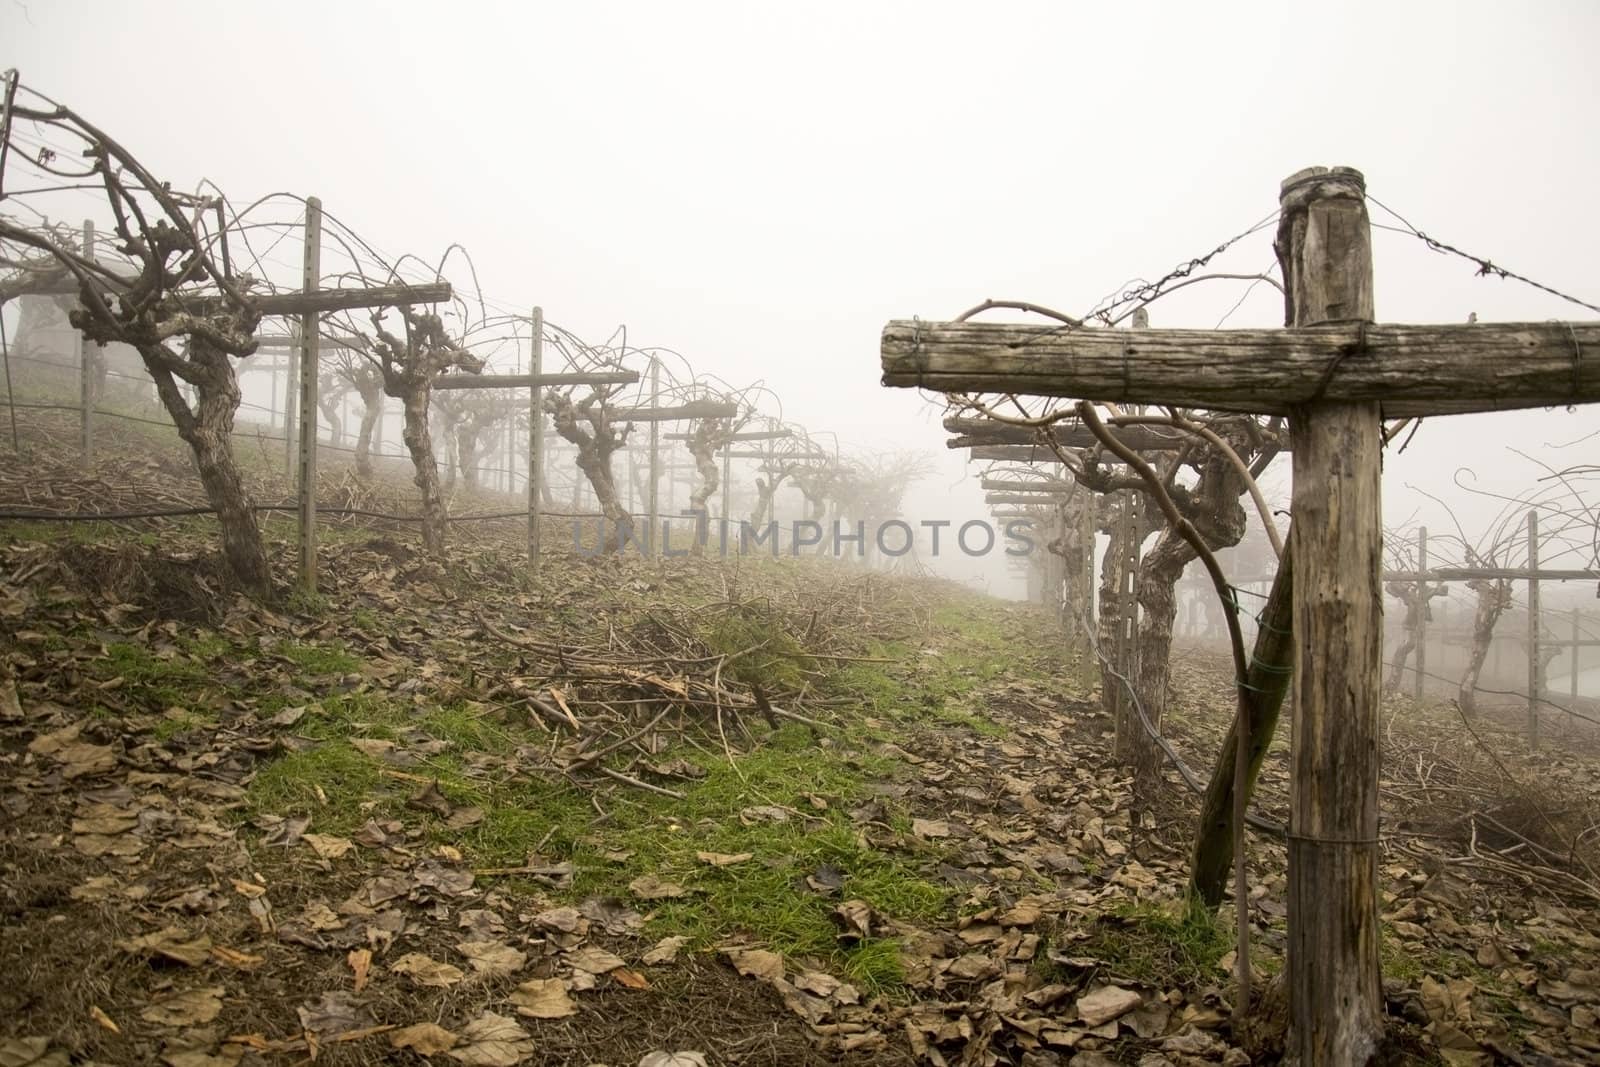 Vineyard in a foggy day. Rest in winter.